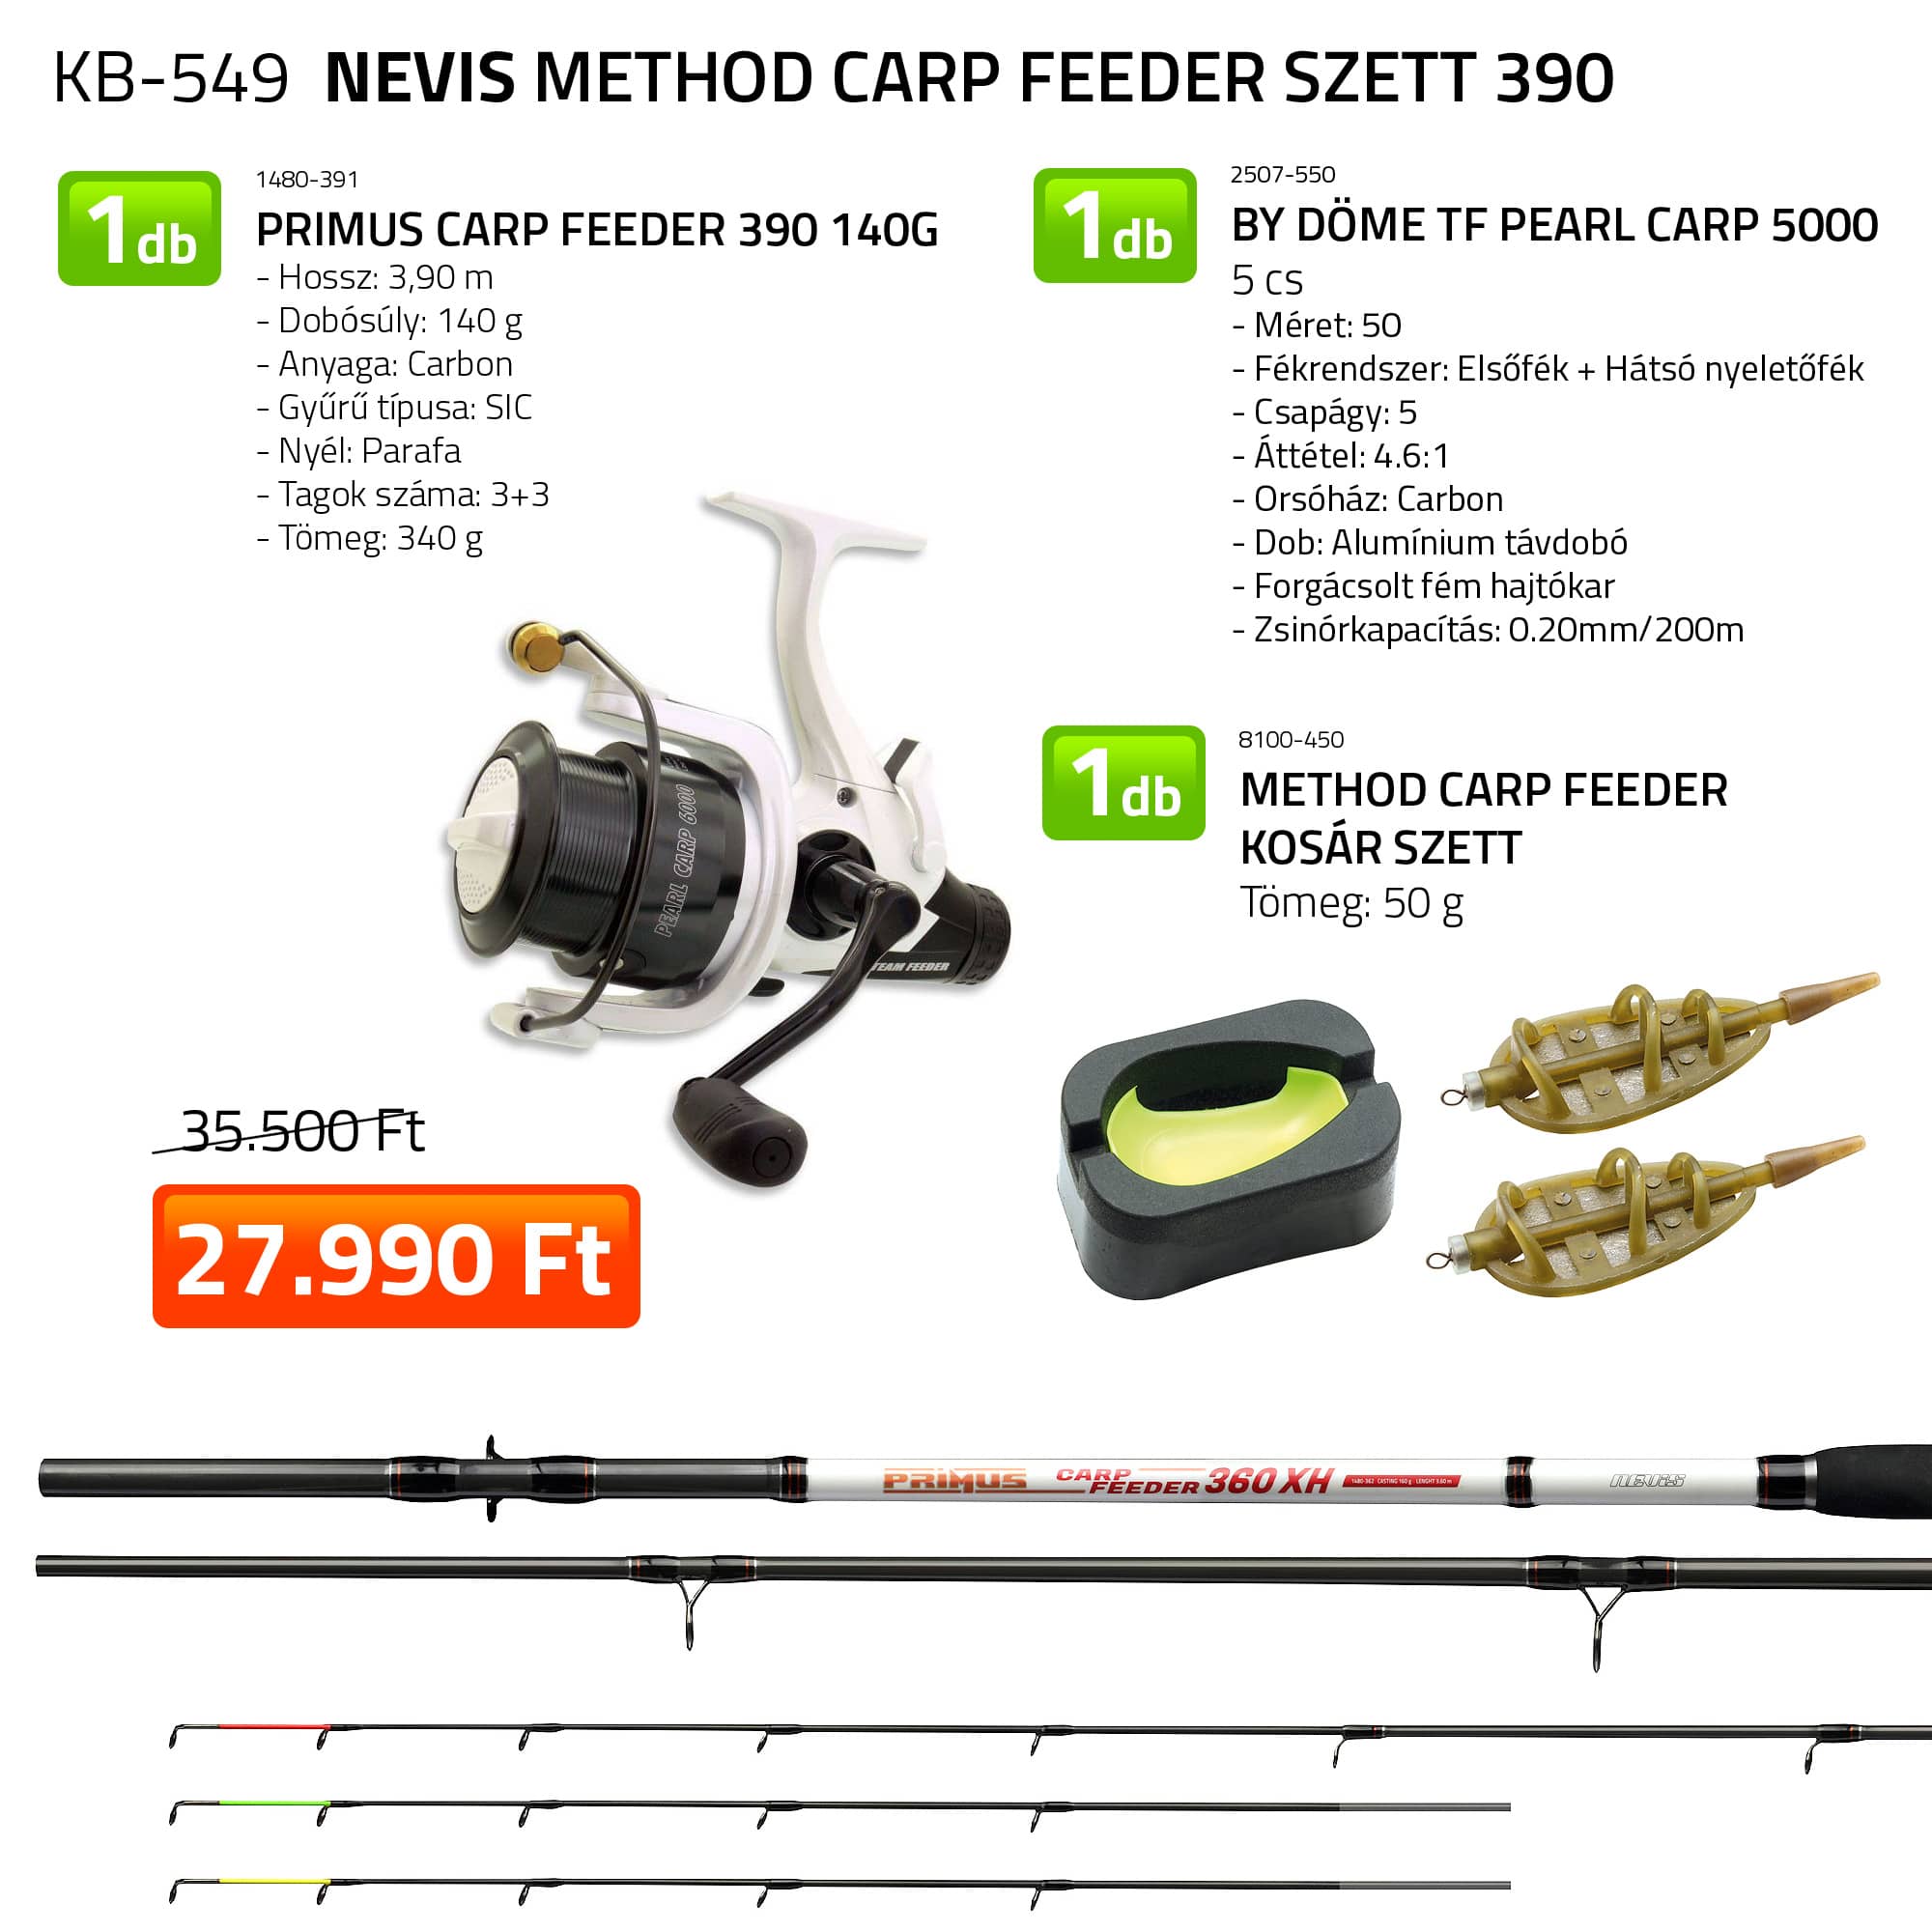 NEVIS METHOD CARP FEEDER SZETT 390